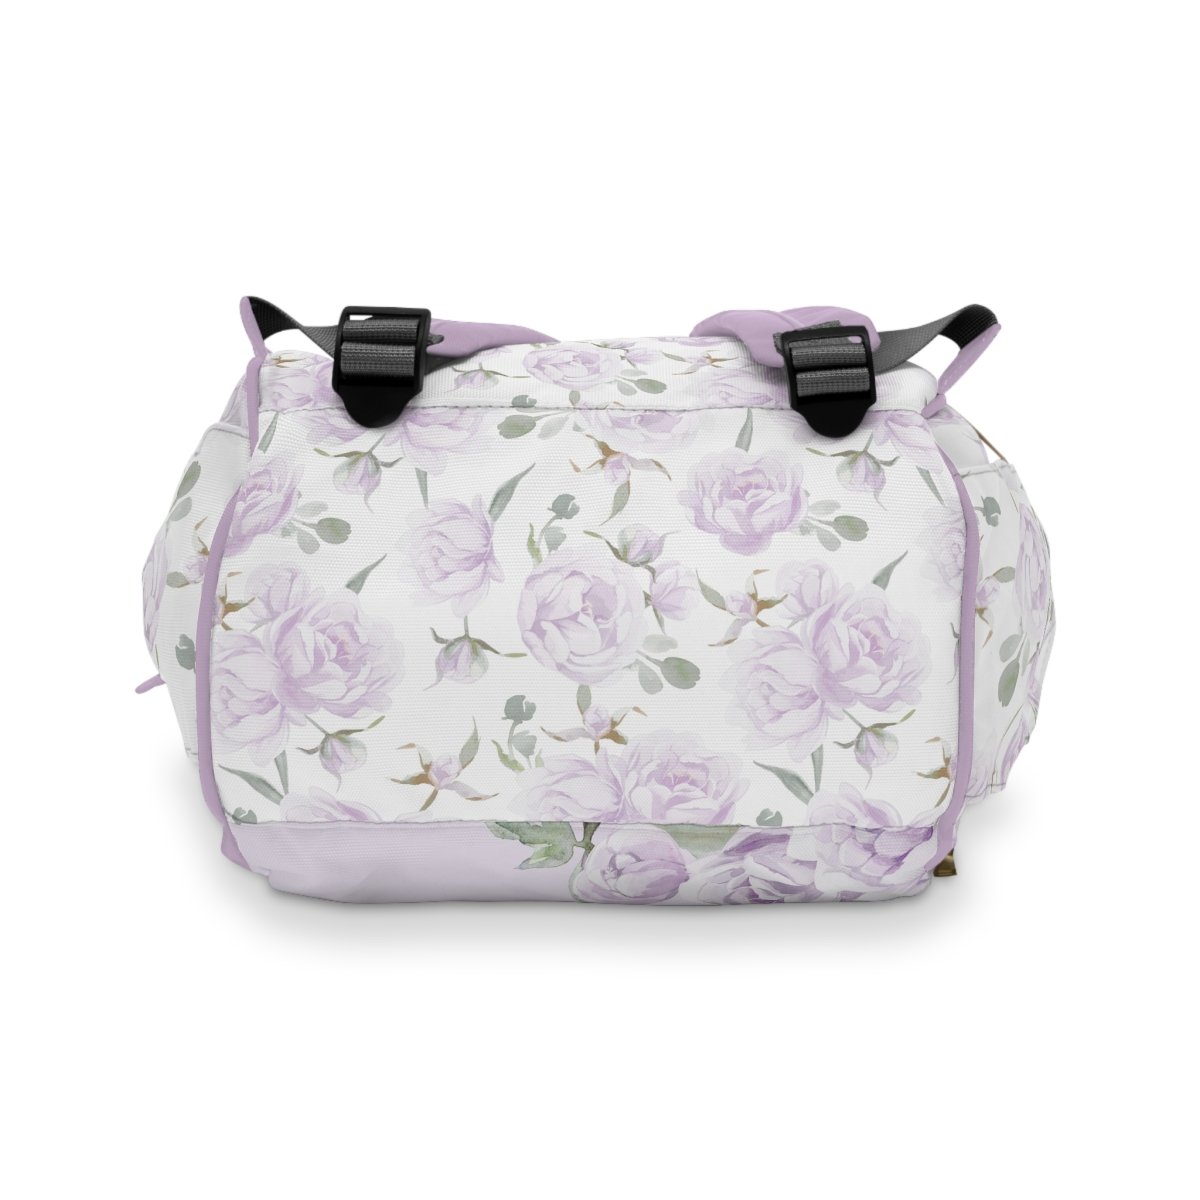 Lovely Lavender Personalized Backpack Diaper Bag - Backpack